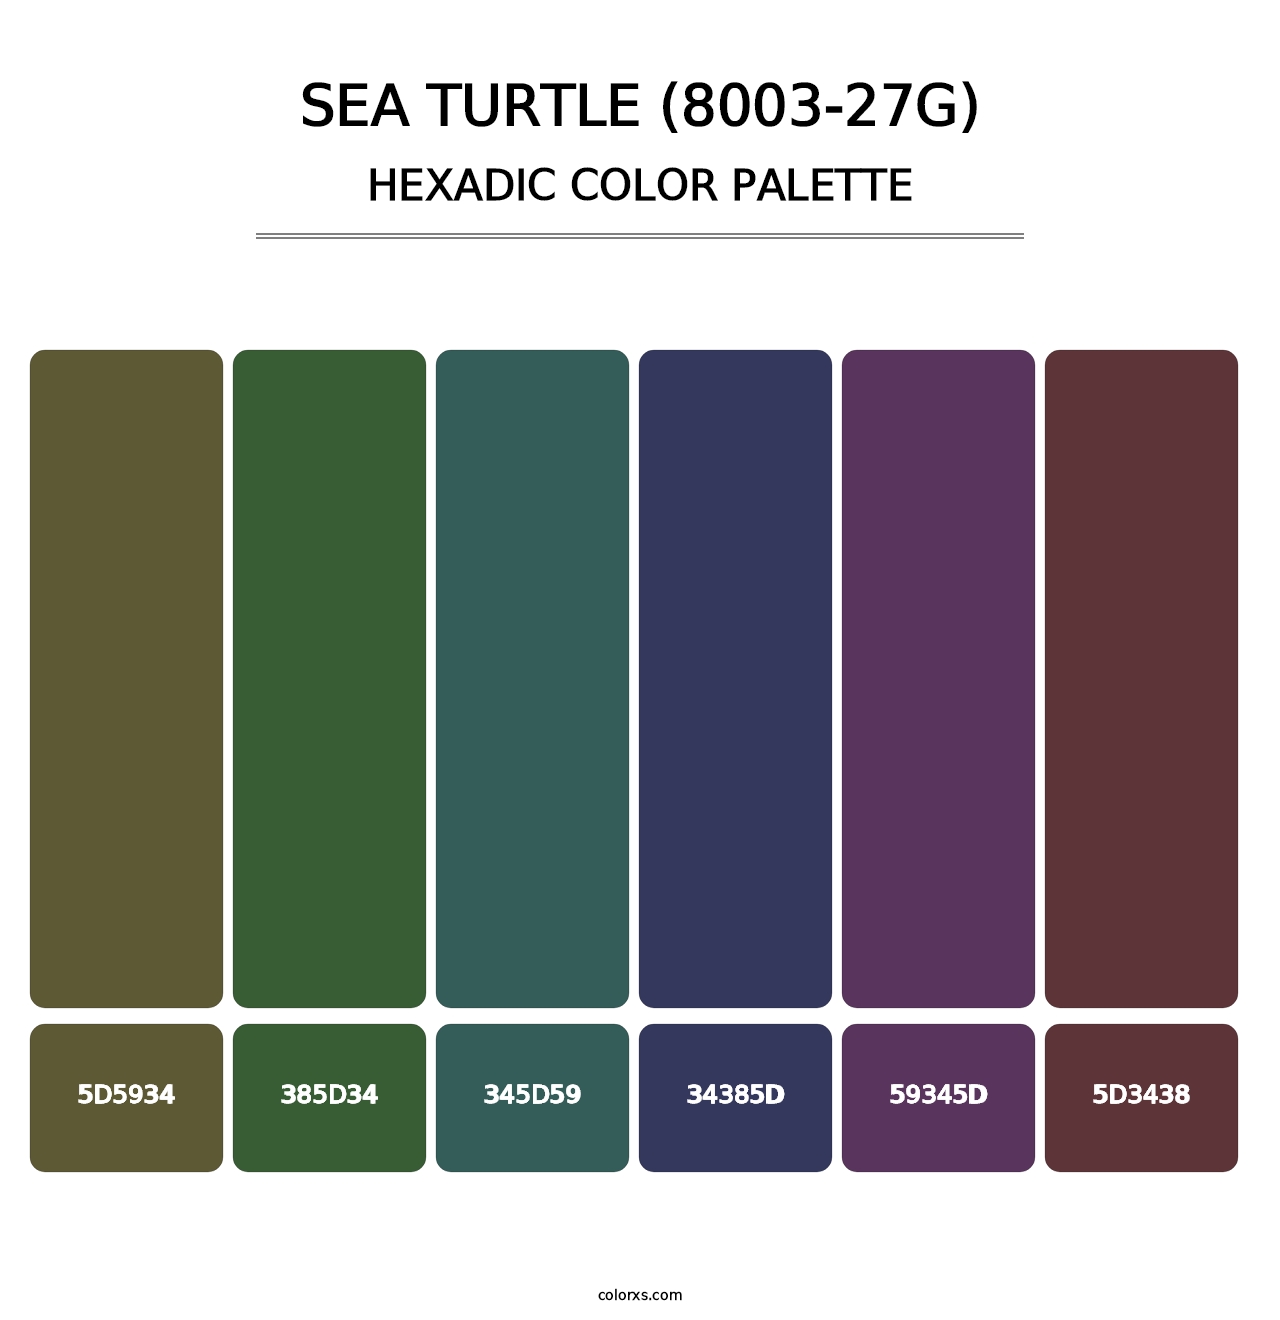 Sea Turtle (8003-27G) - Hexadic Color Palette